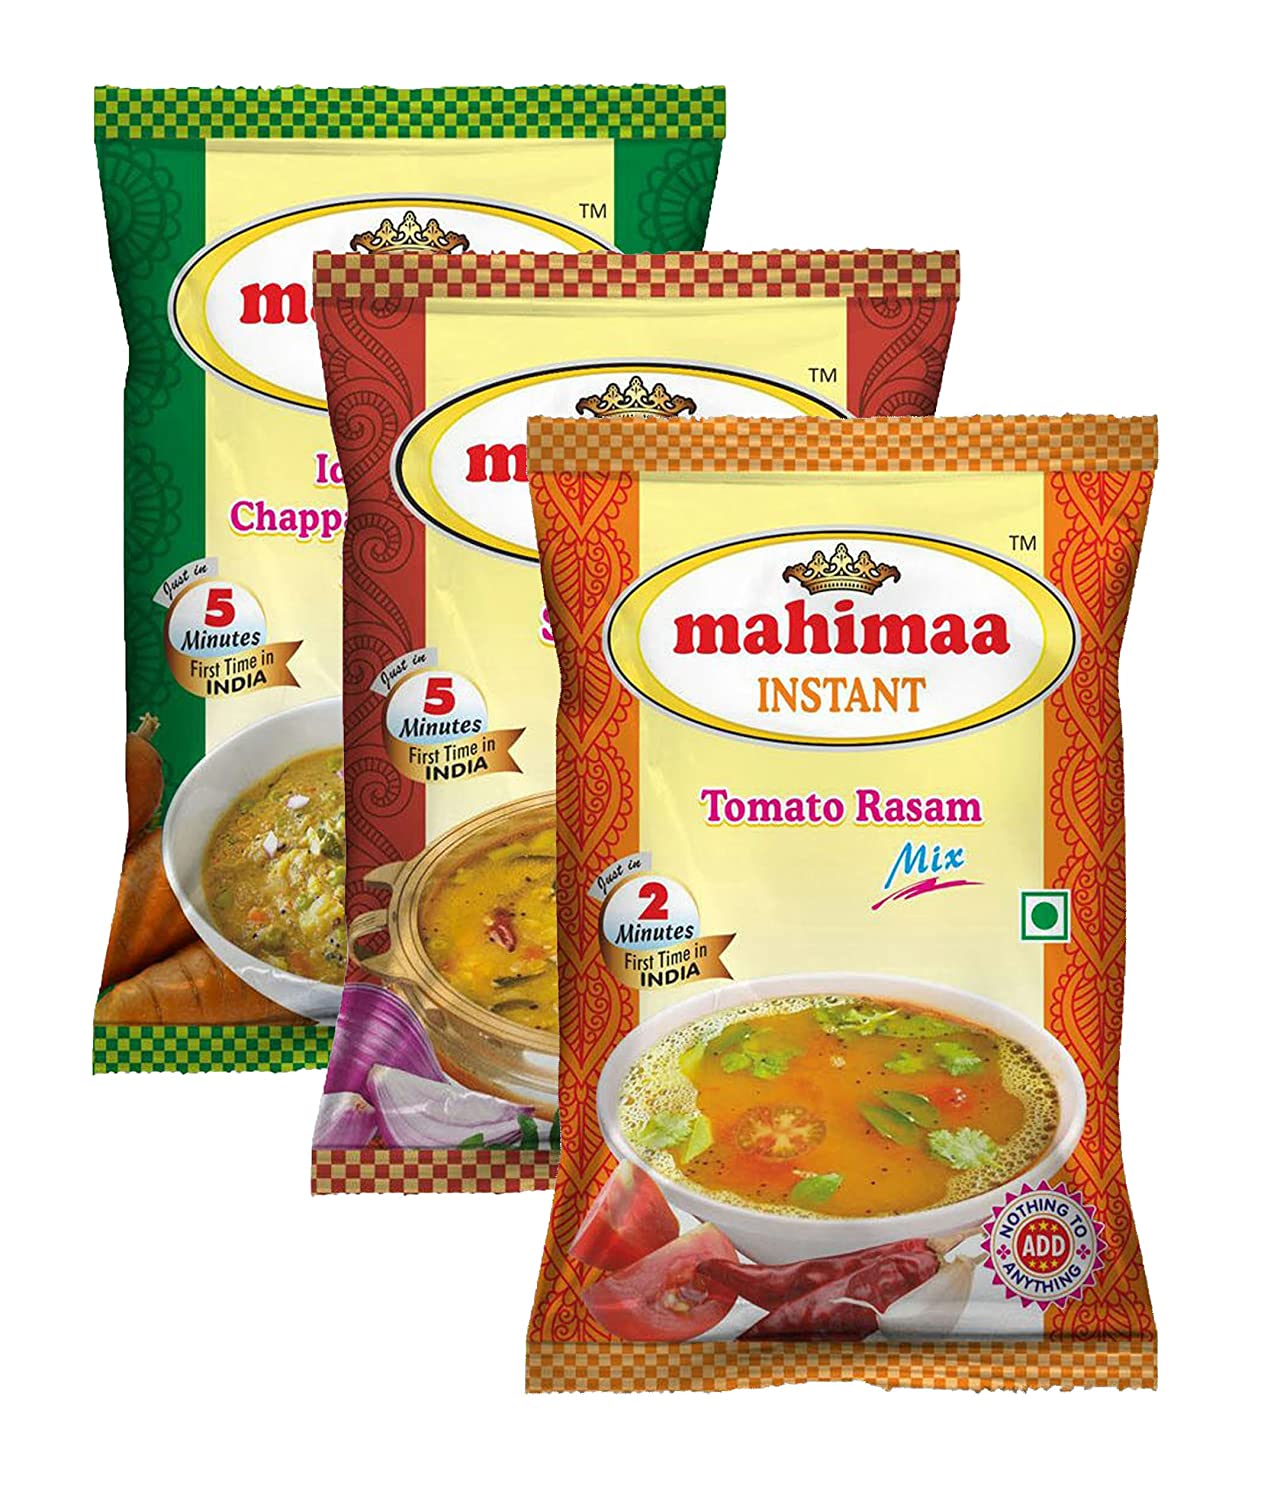 Mahimaa Instant Idly, Dosa, Chappathi, and Parotta Kuruma Mix, Tomato Rasam Mix, Sambar Mix, Size- 50g, Pack of 3